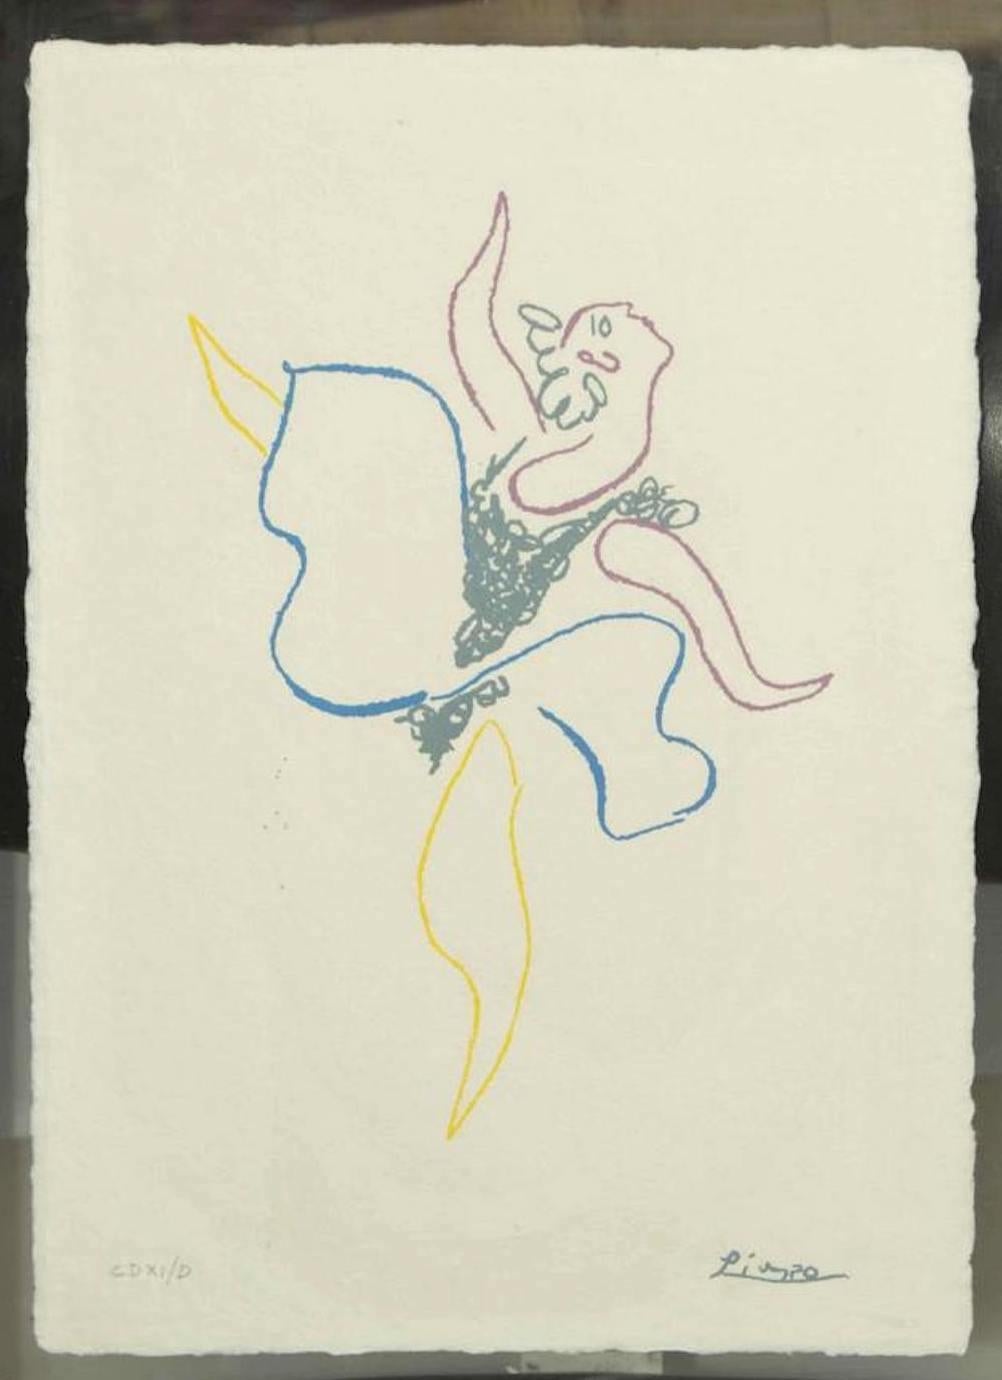 (after) Pablo Picasso Figurative Print - La Bailarina - Original Lithograph After Pablo Picasso - 1954